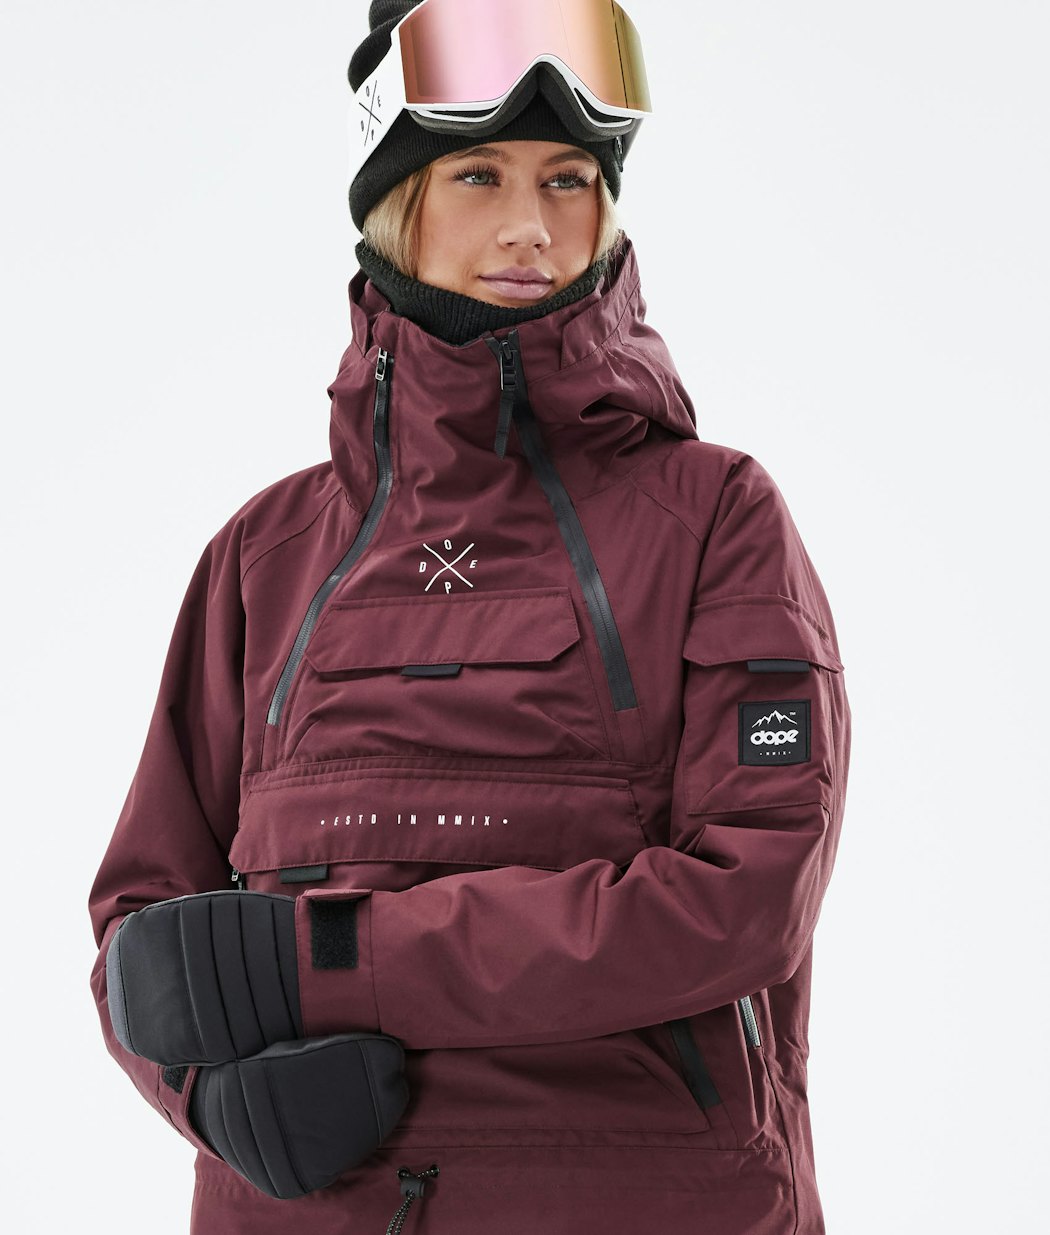 Akin W 2019 Snowboard Jacket Women Burgundy Renewed